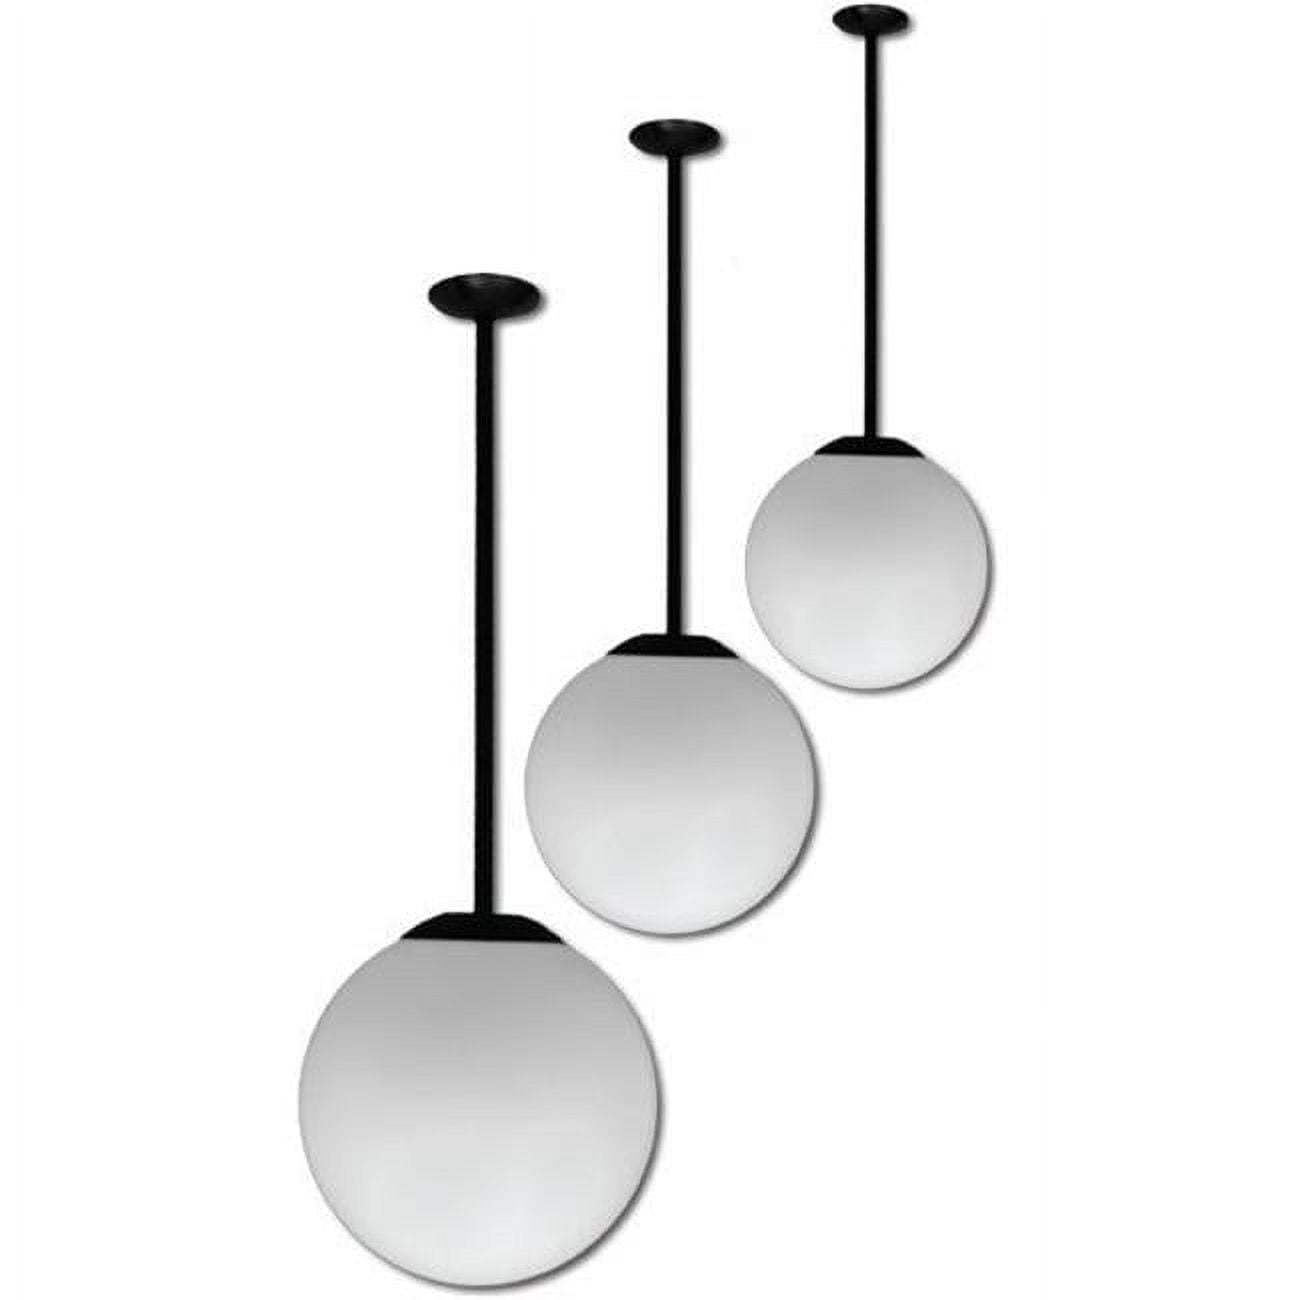 D7515-18-b 16 In. 120 V 50 Watts Ceiling Globe Fixture 18 In. Drop With Metal Halide Lamp, Black